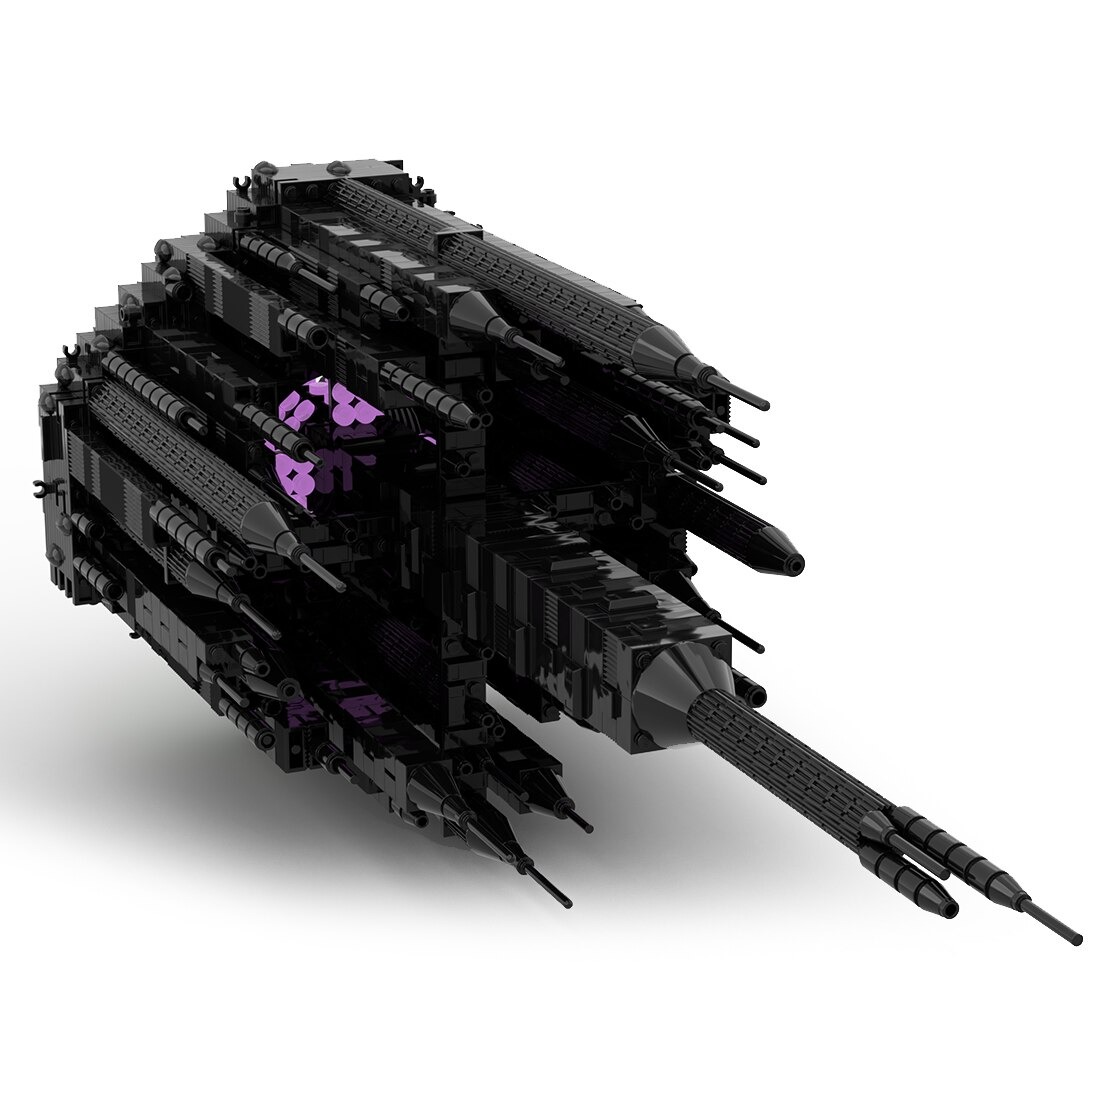 moc 125965 replicator cruiser space wars main 2 1